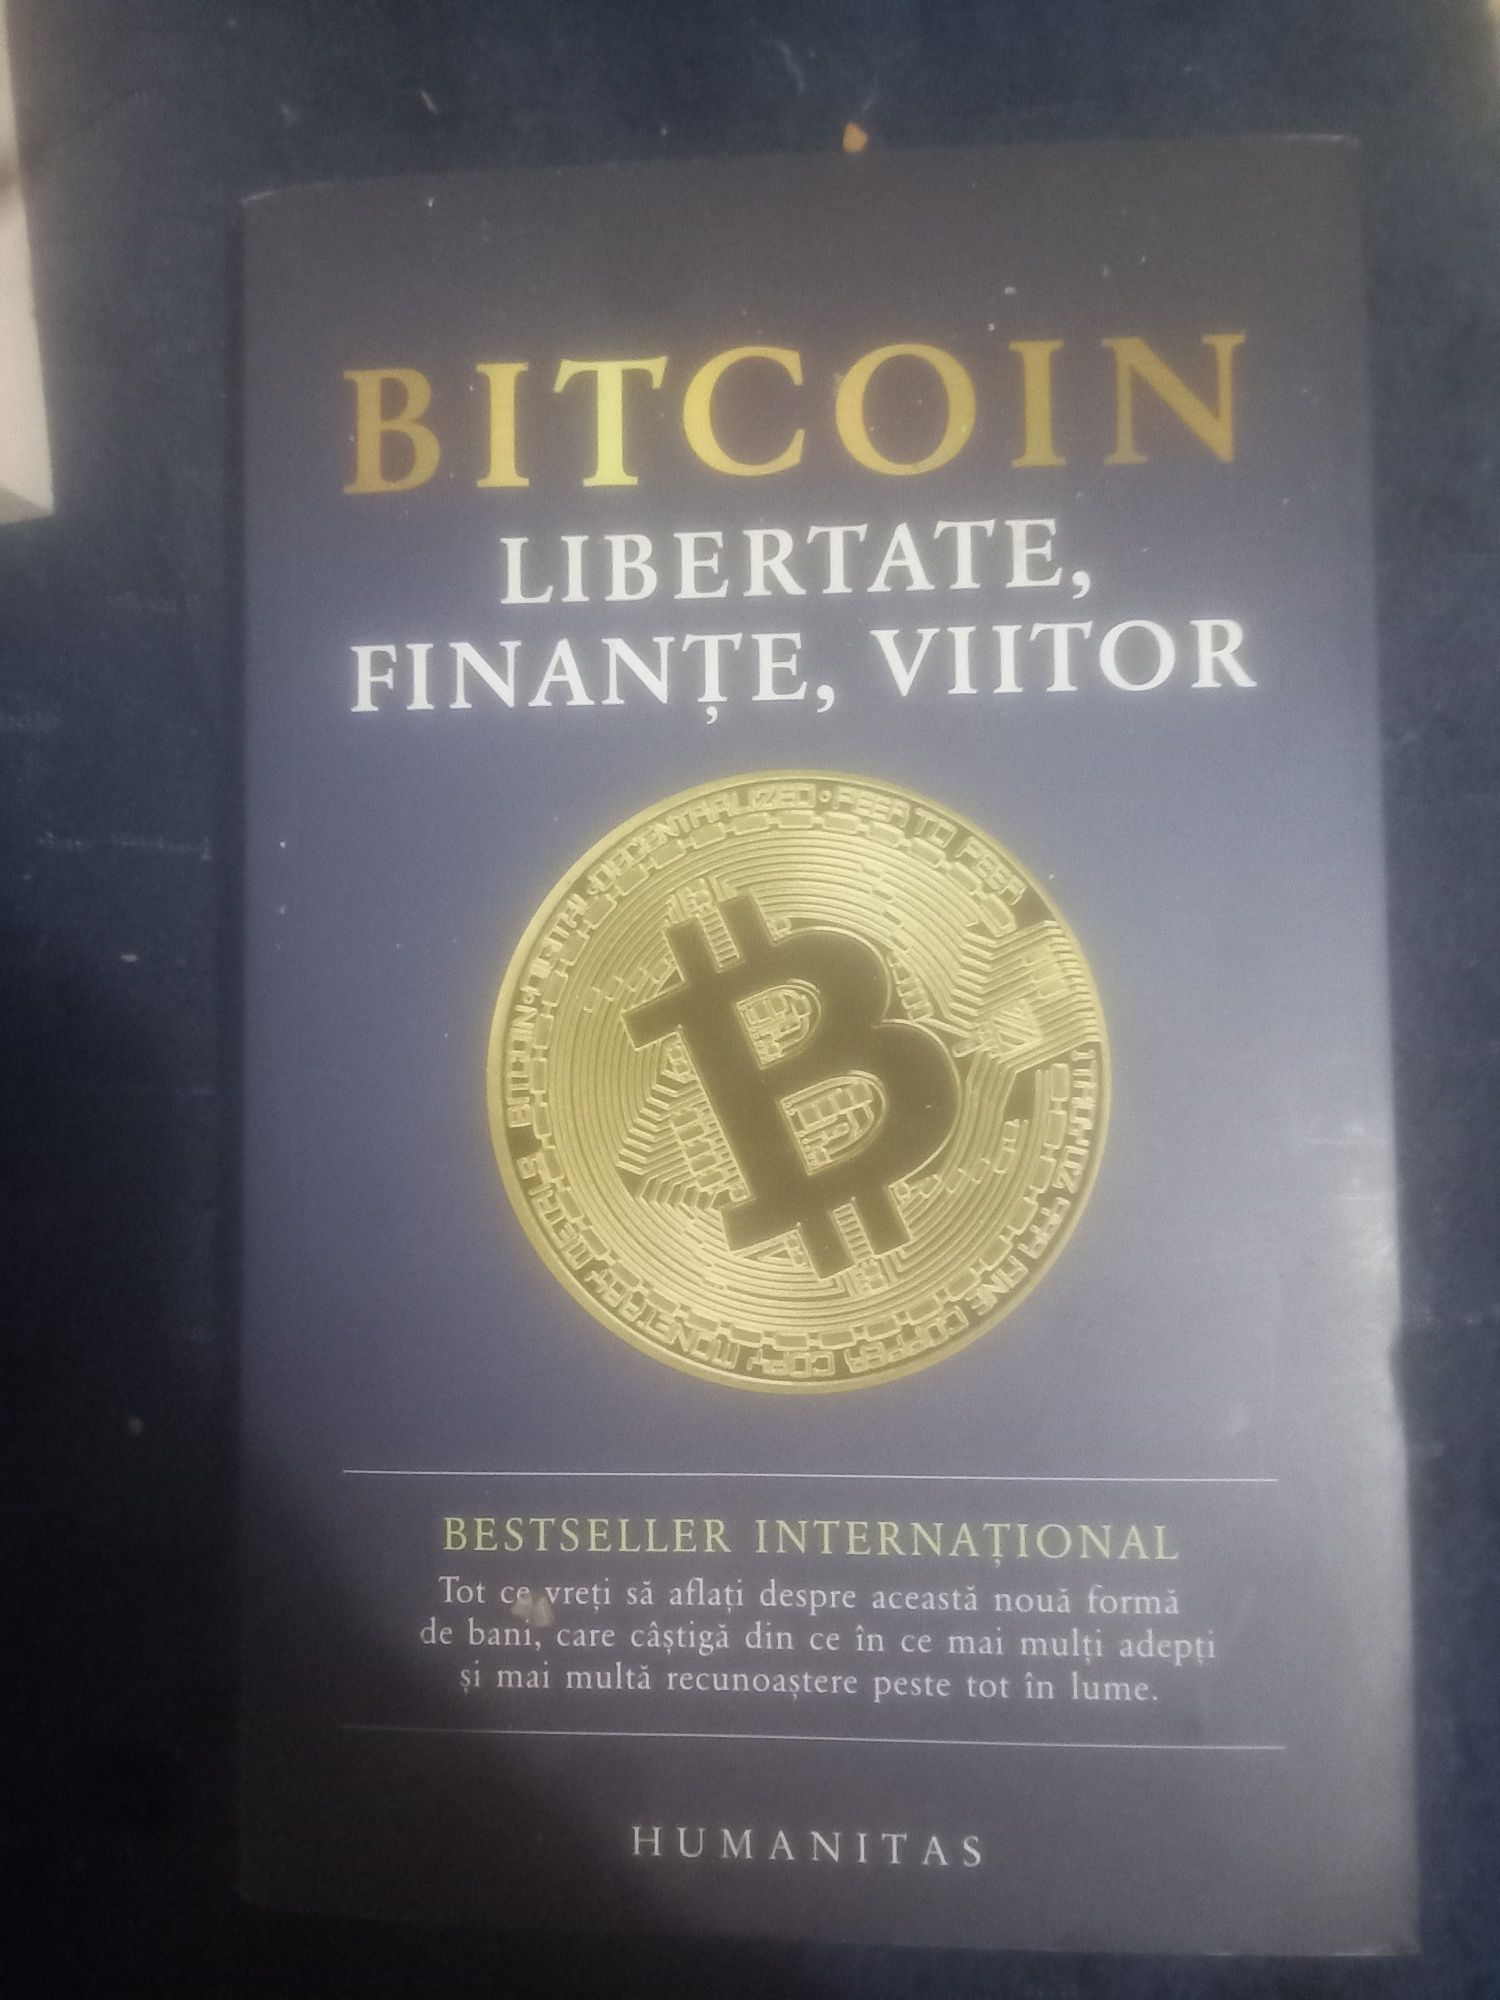 Bitcoin libertate finante viitor